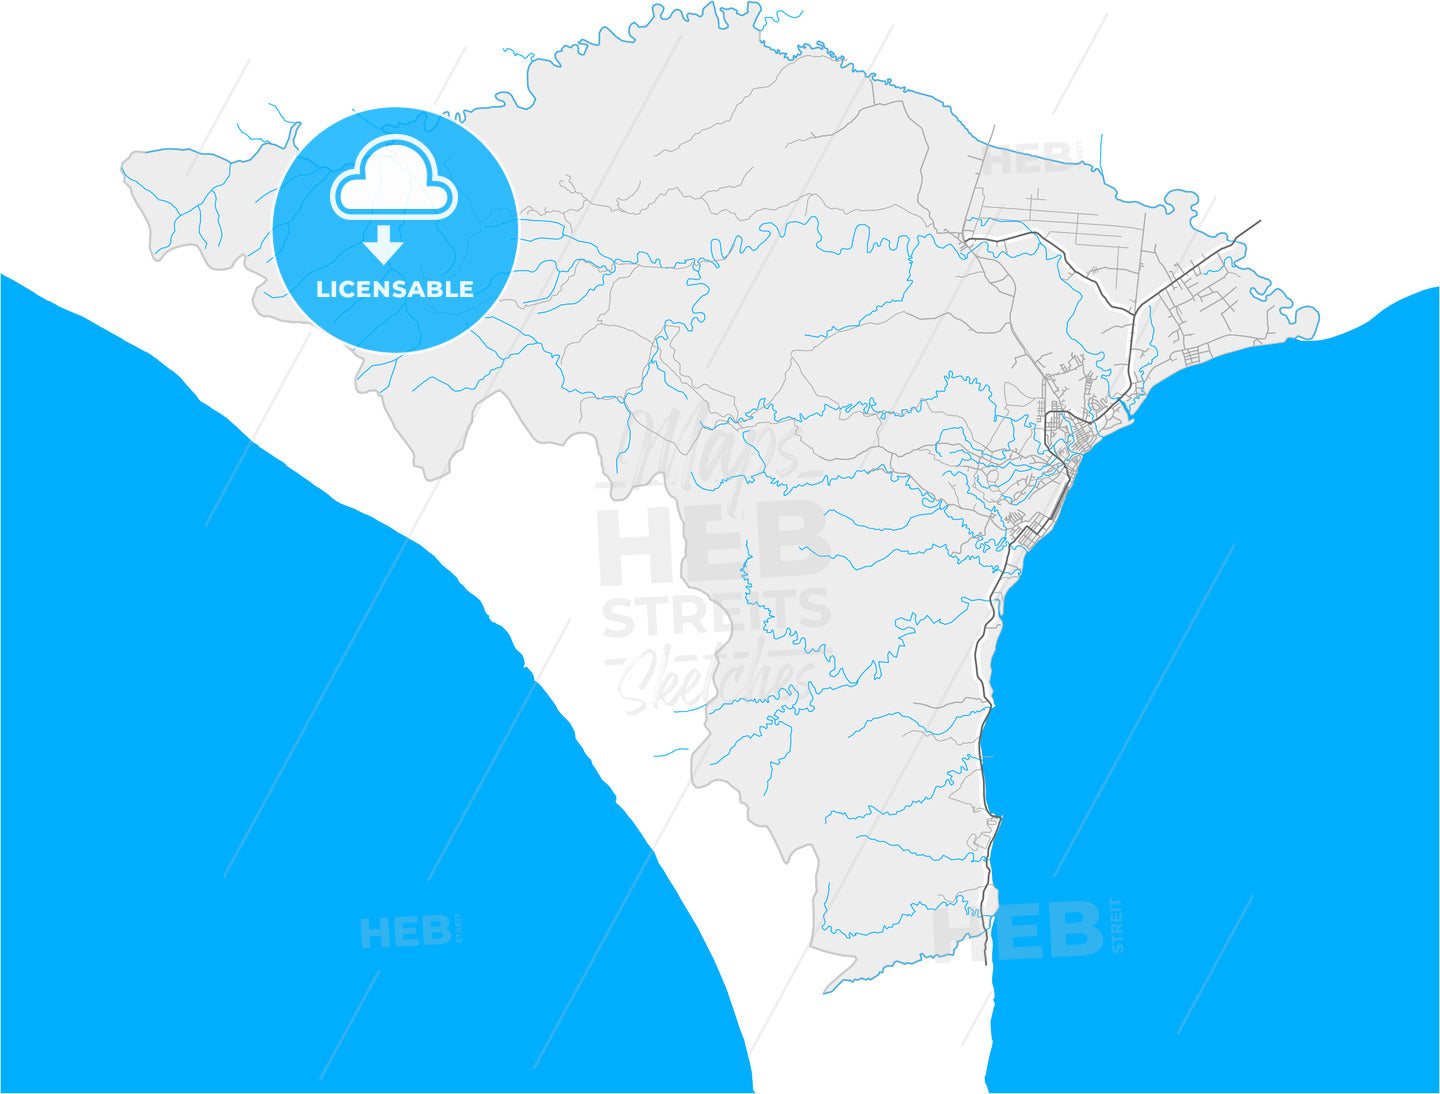 Puerto Armuelles, Chiriquí, Panama, high quality vector map